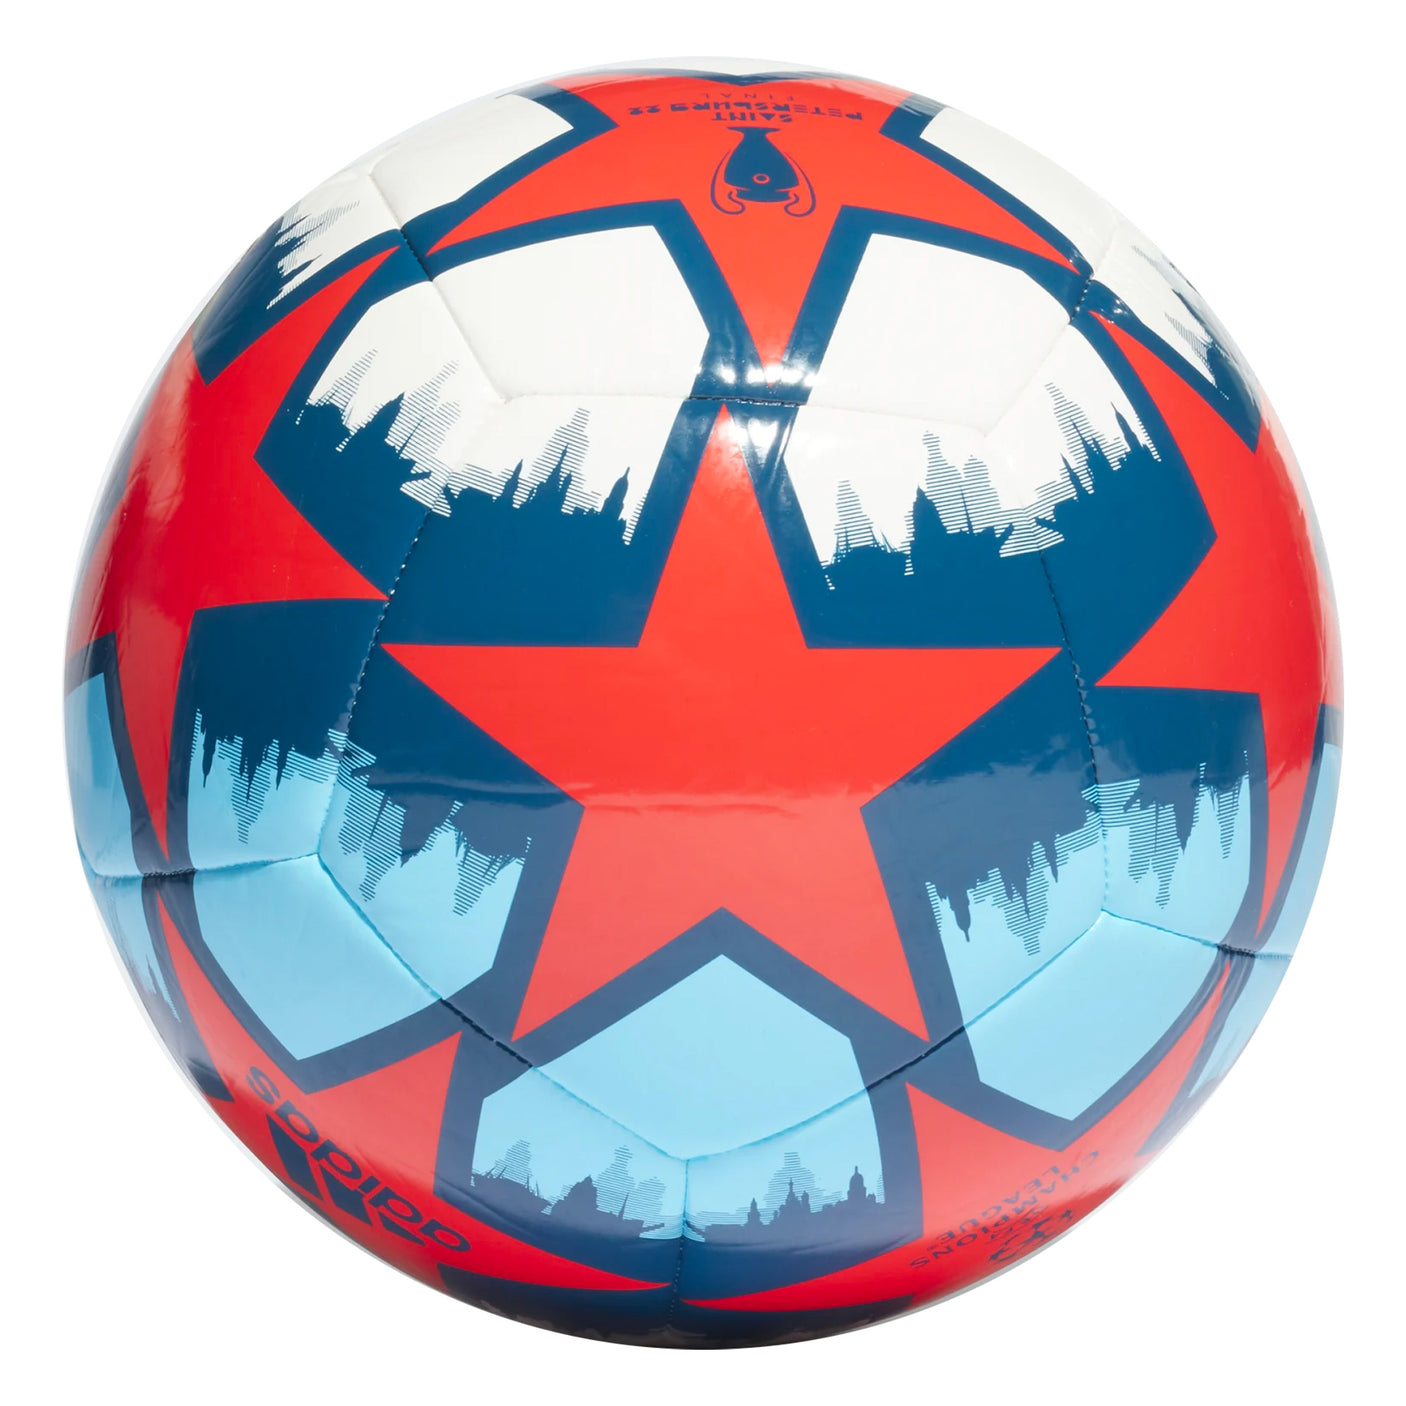 Adidas UEFA Champions League Saint Petersburg Final Ball Size 5